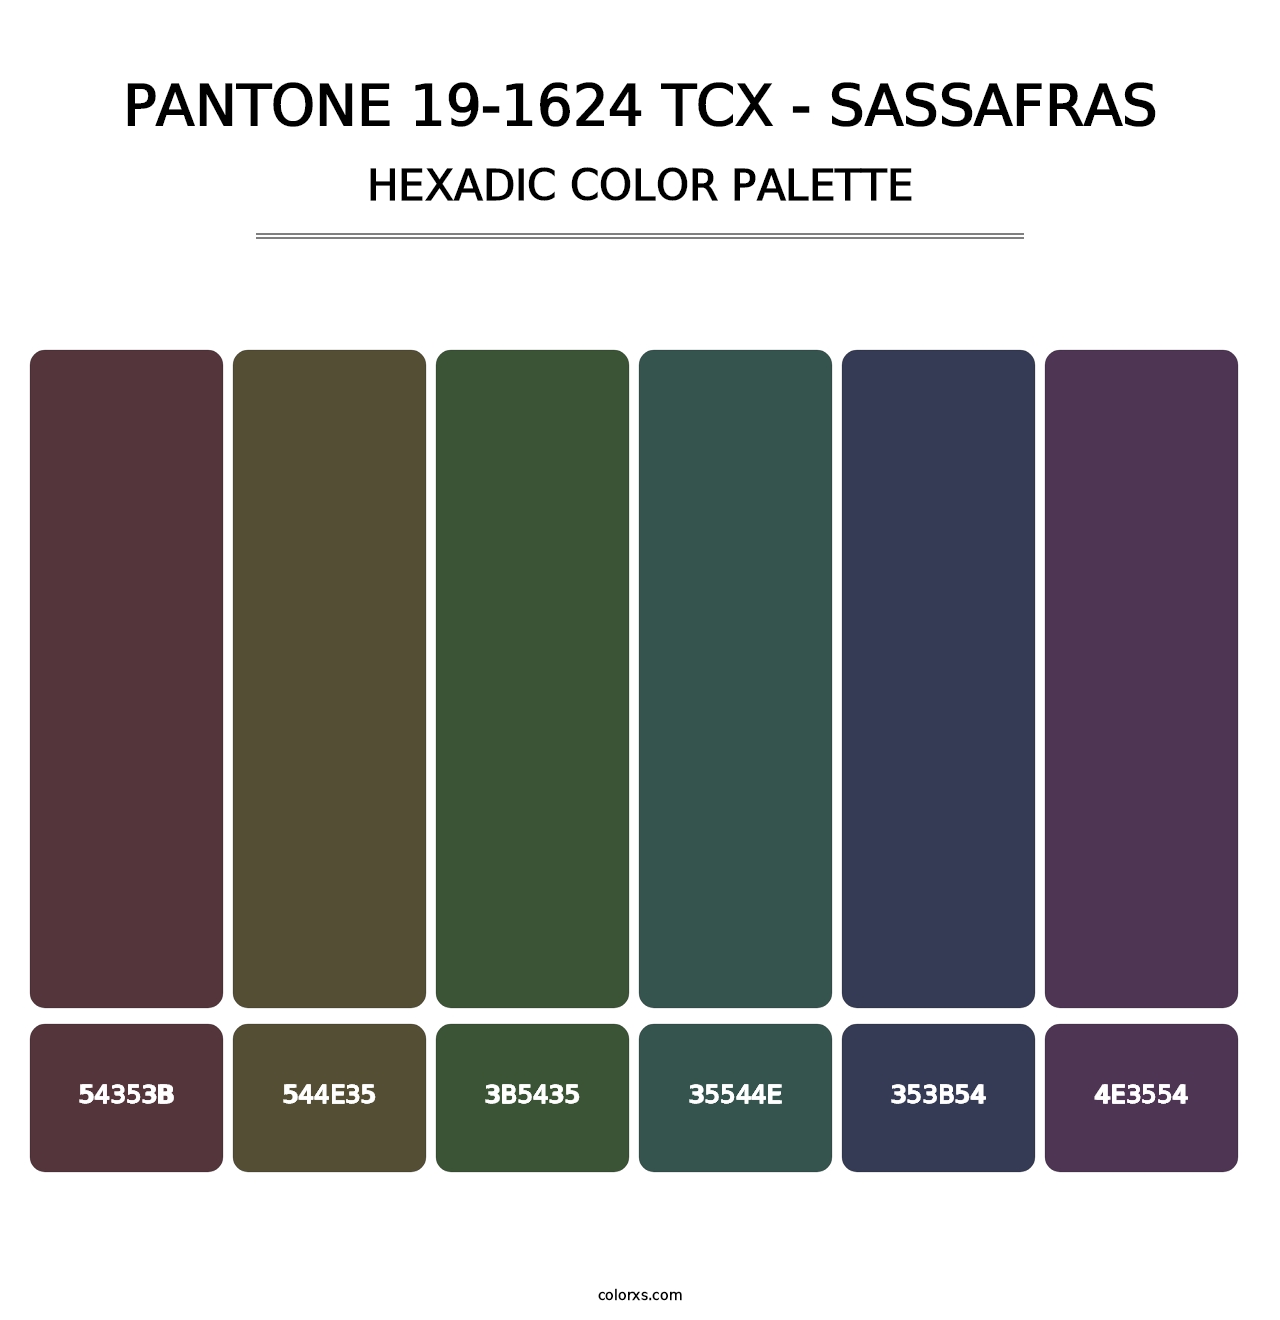 PANTONE 19-1624 TCX - Sassafras - Hexadic Color Palette